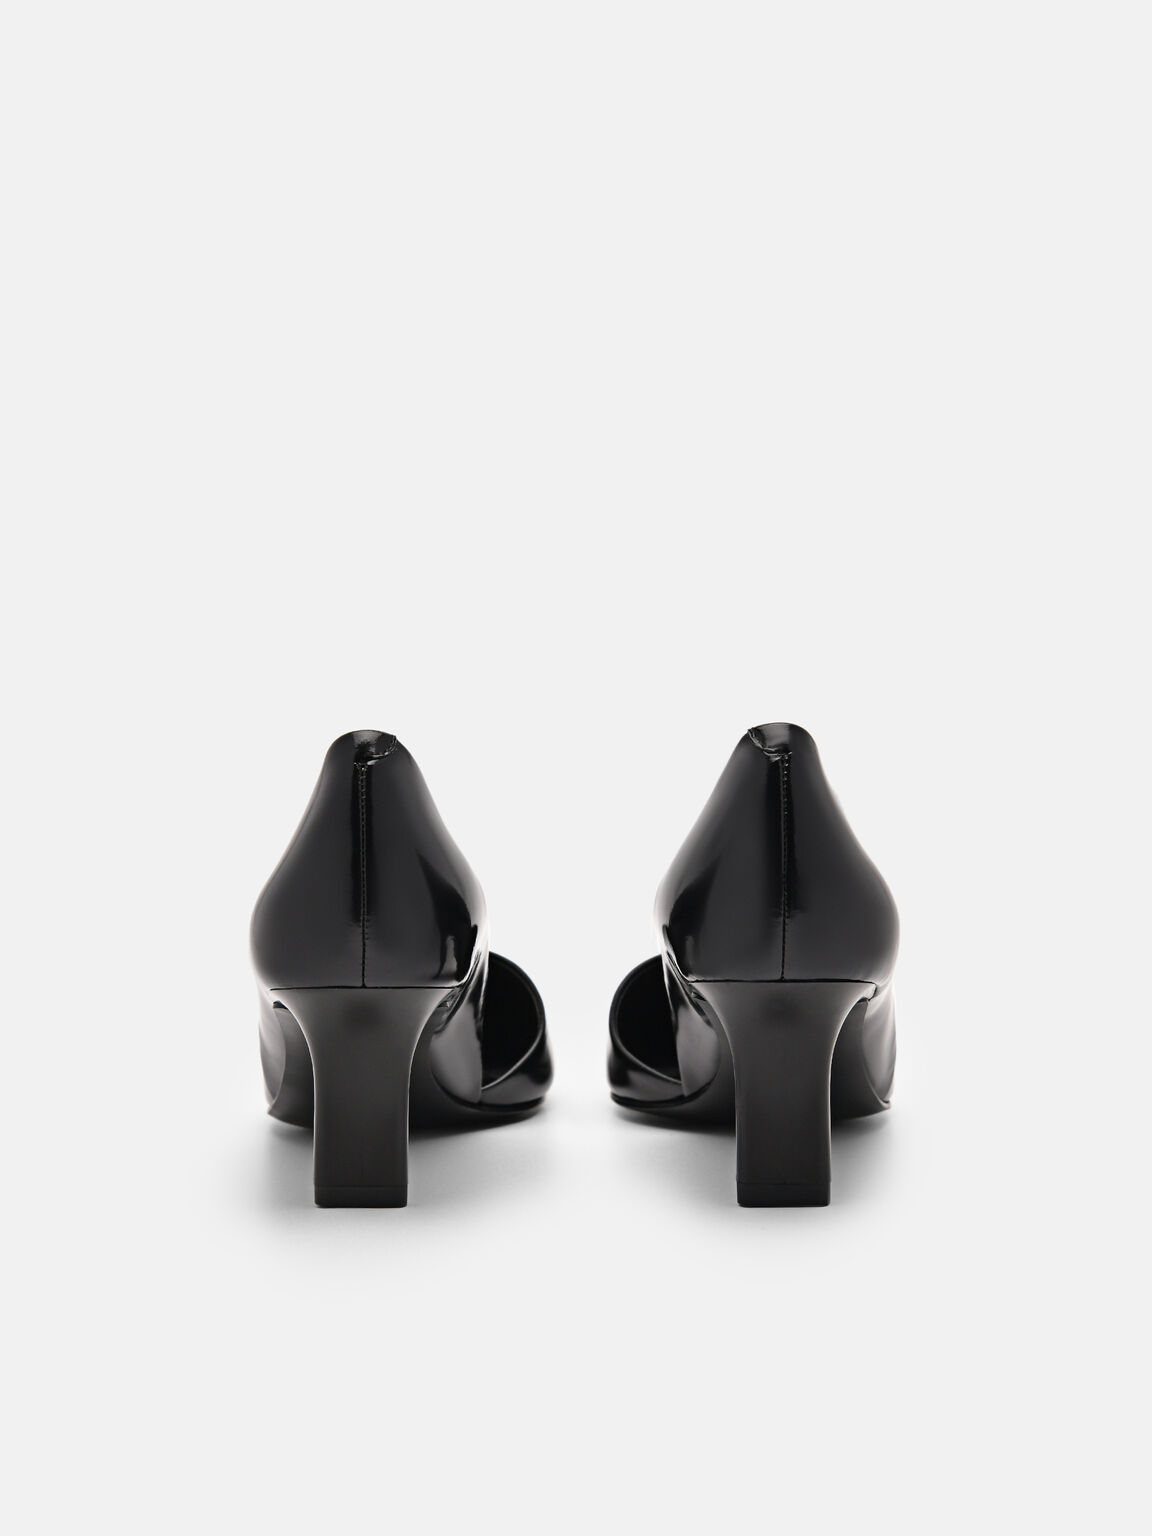 Giày cao gót mũi nhọn Rocco Leather Heel D'Orsay, Đen